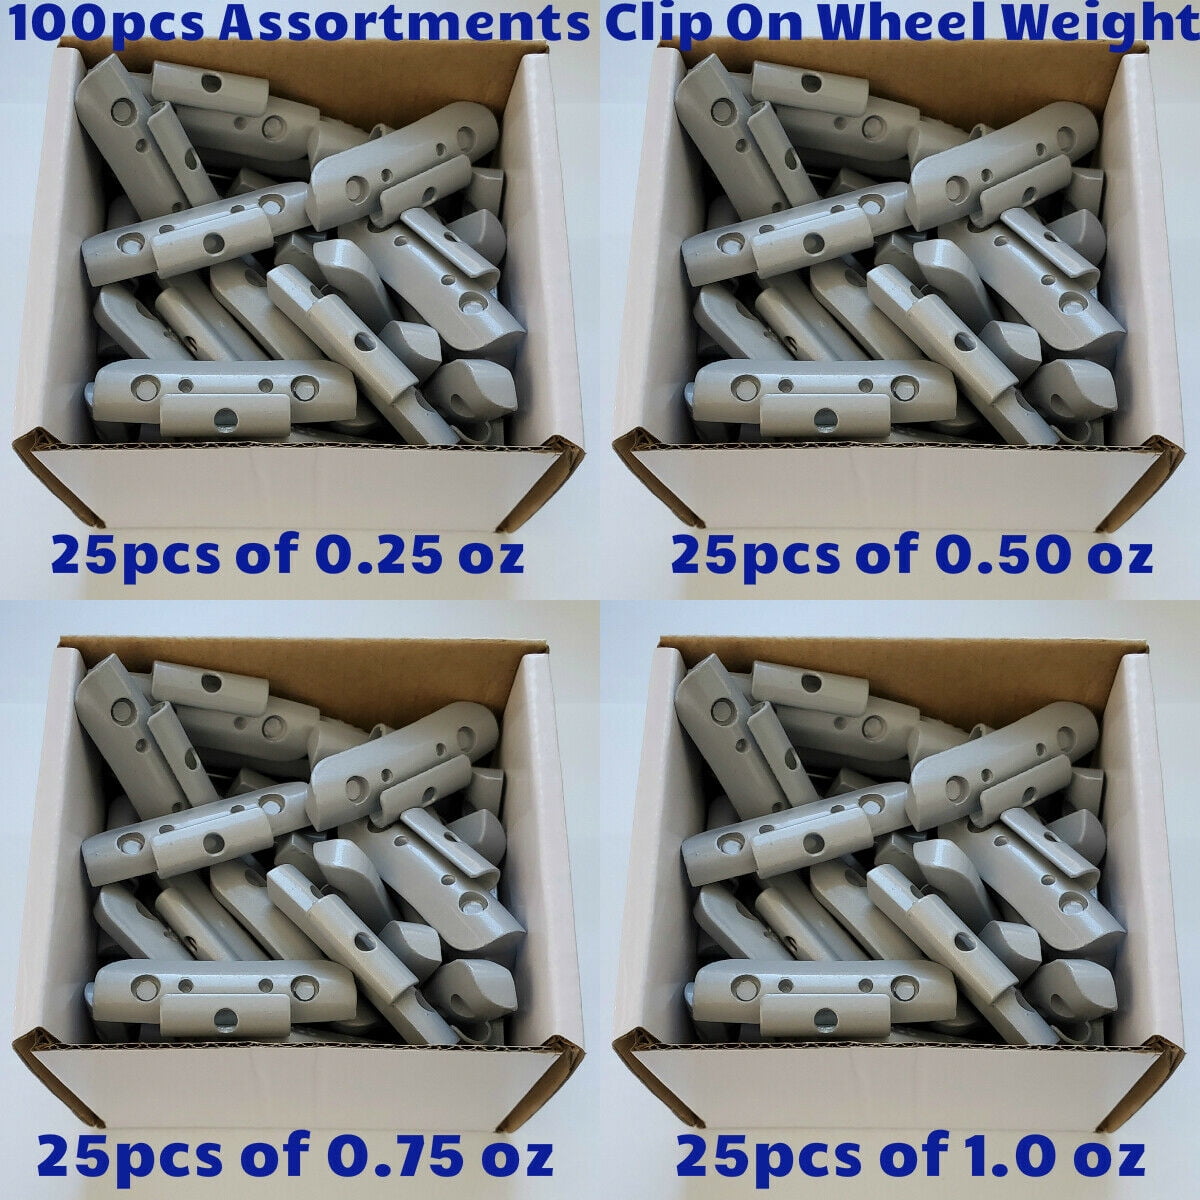 Quality 100-Pcs Assortment Clip-On Weight Balance 0.25 0.50 0.75 1.00 Oz MC Style Wheel 